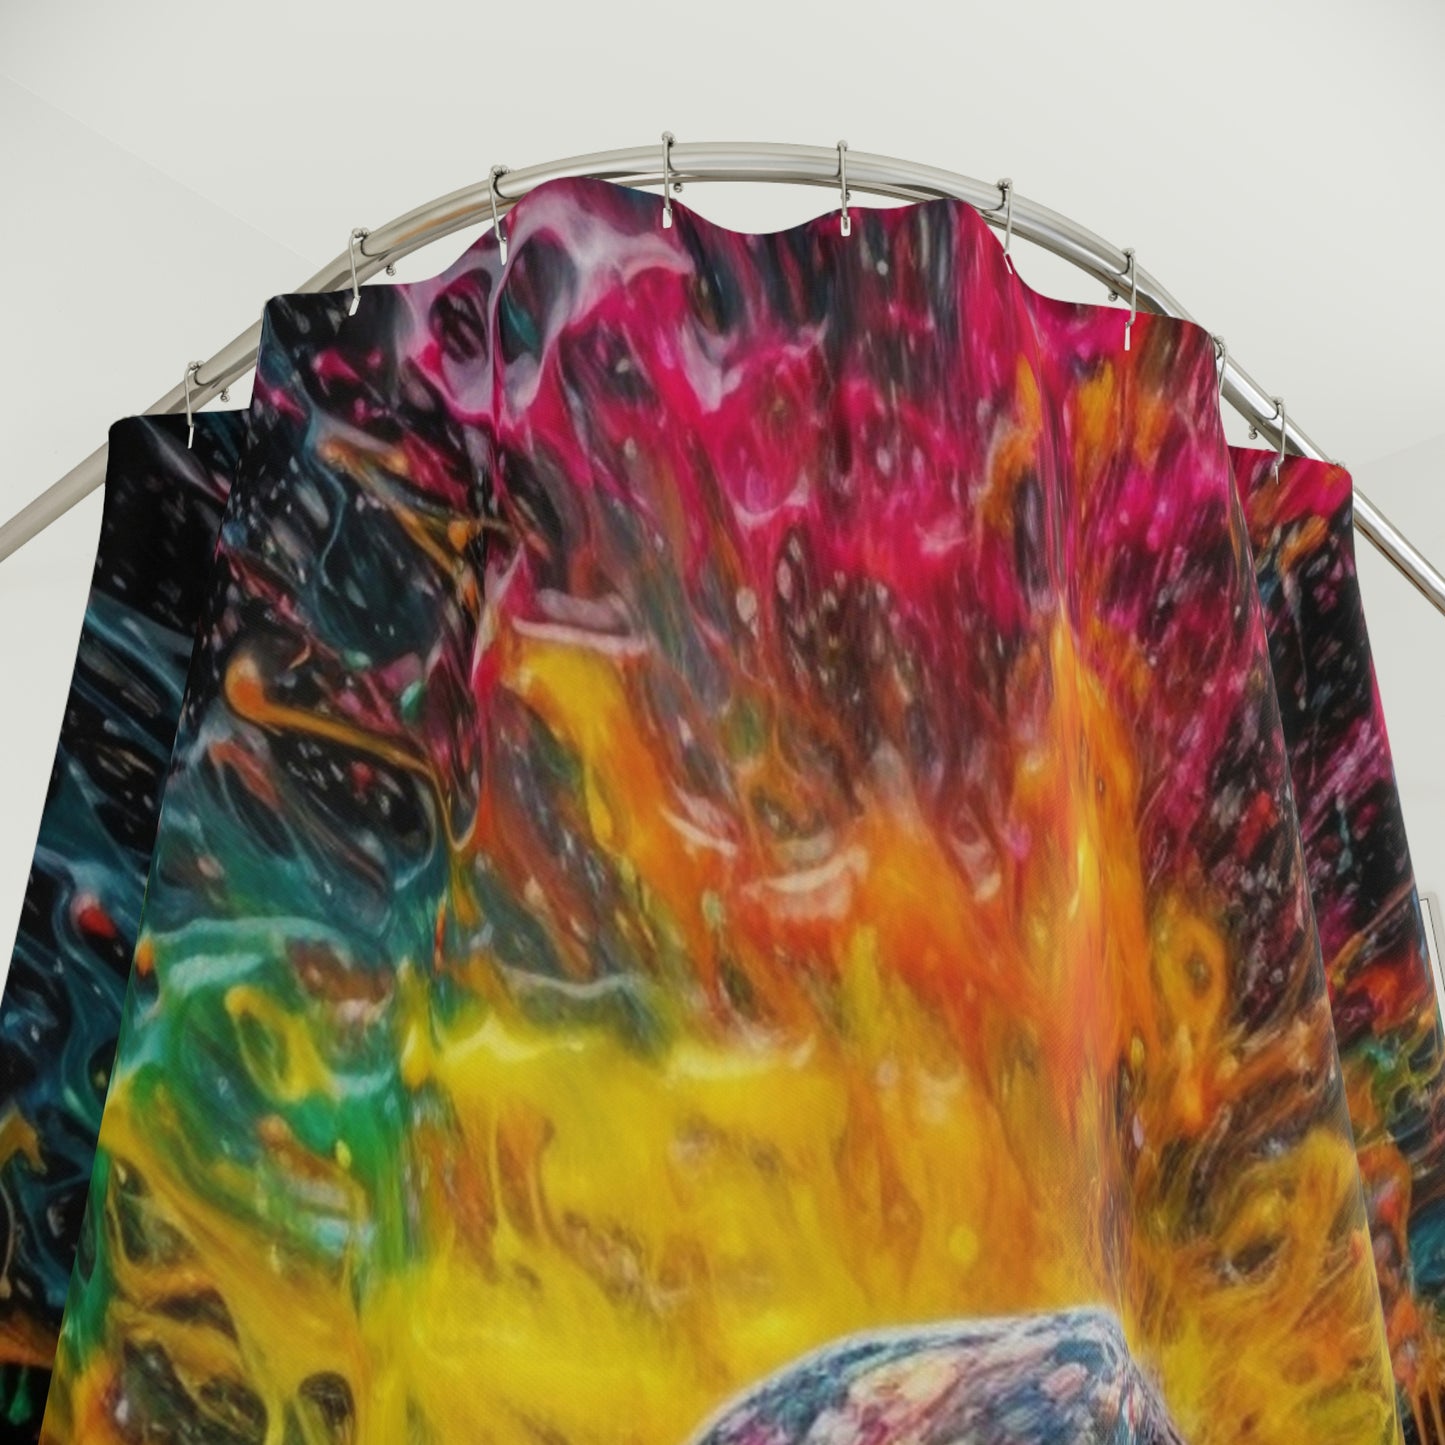 Polyester Shower Curtain kid color rain 3